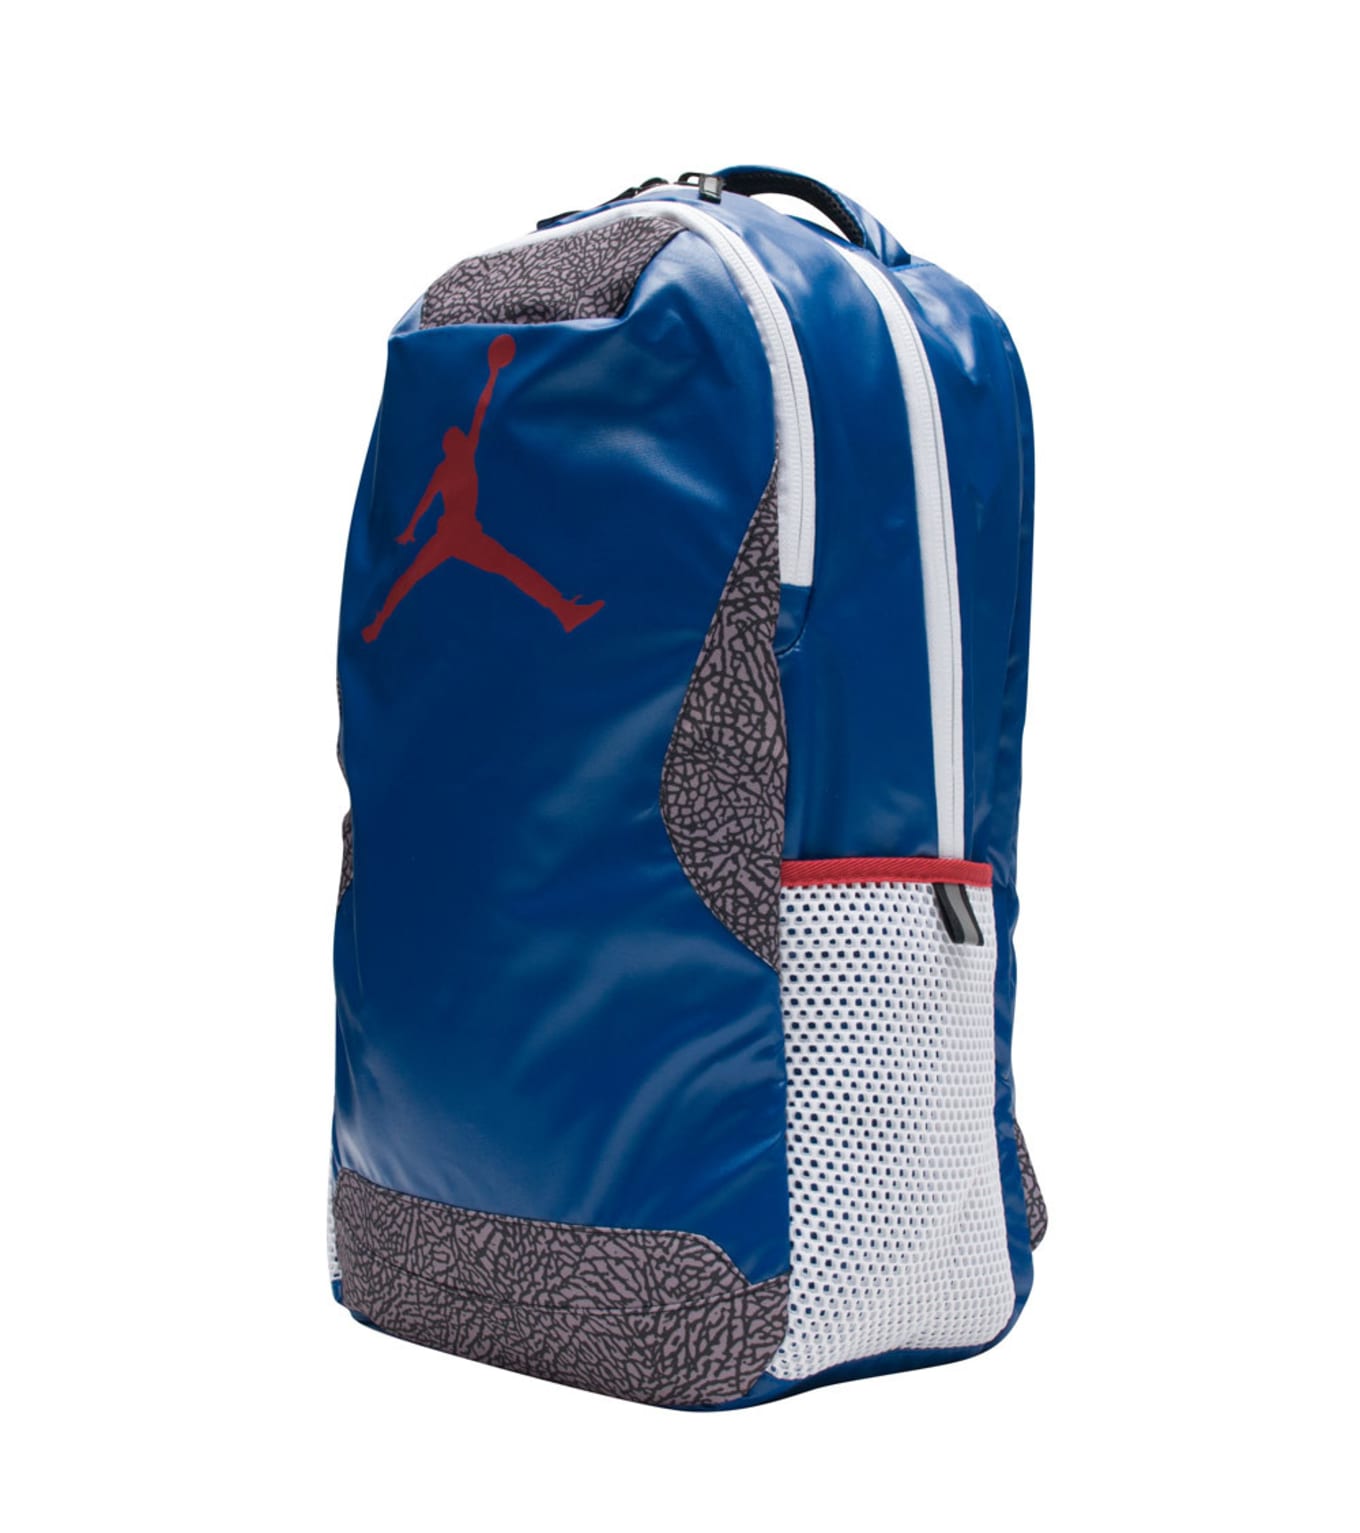 True Blue Air Jordan 3 Backpack | Sole 